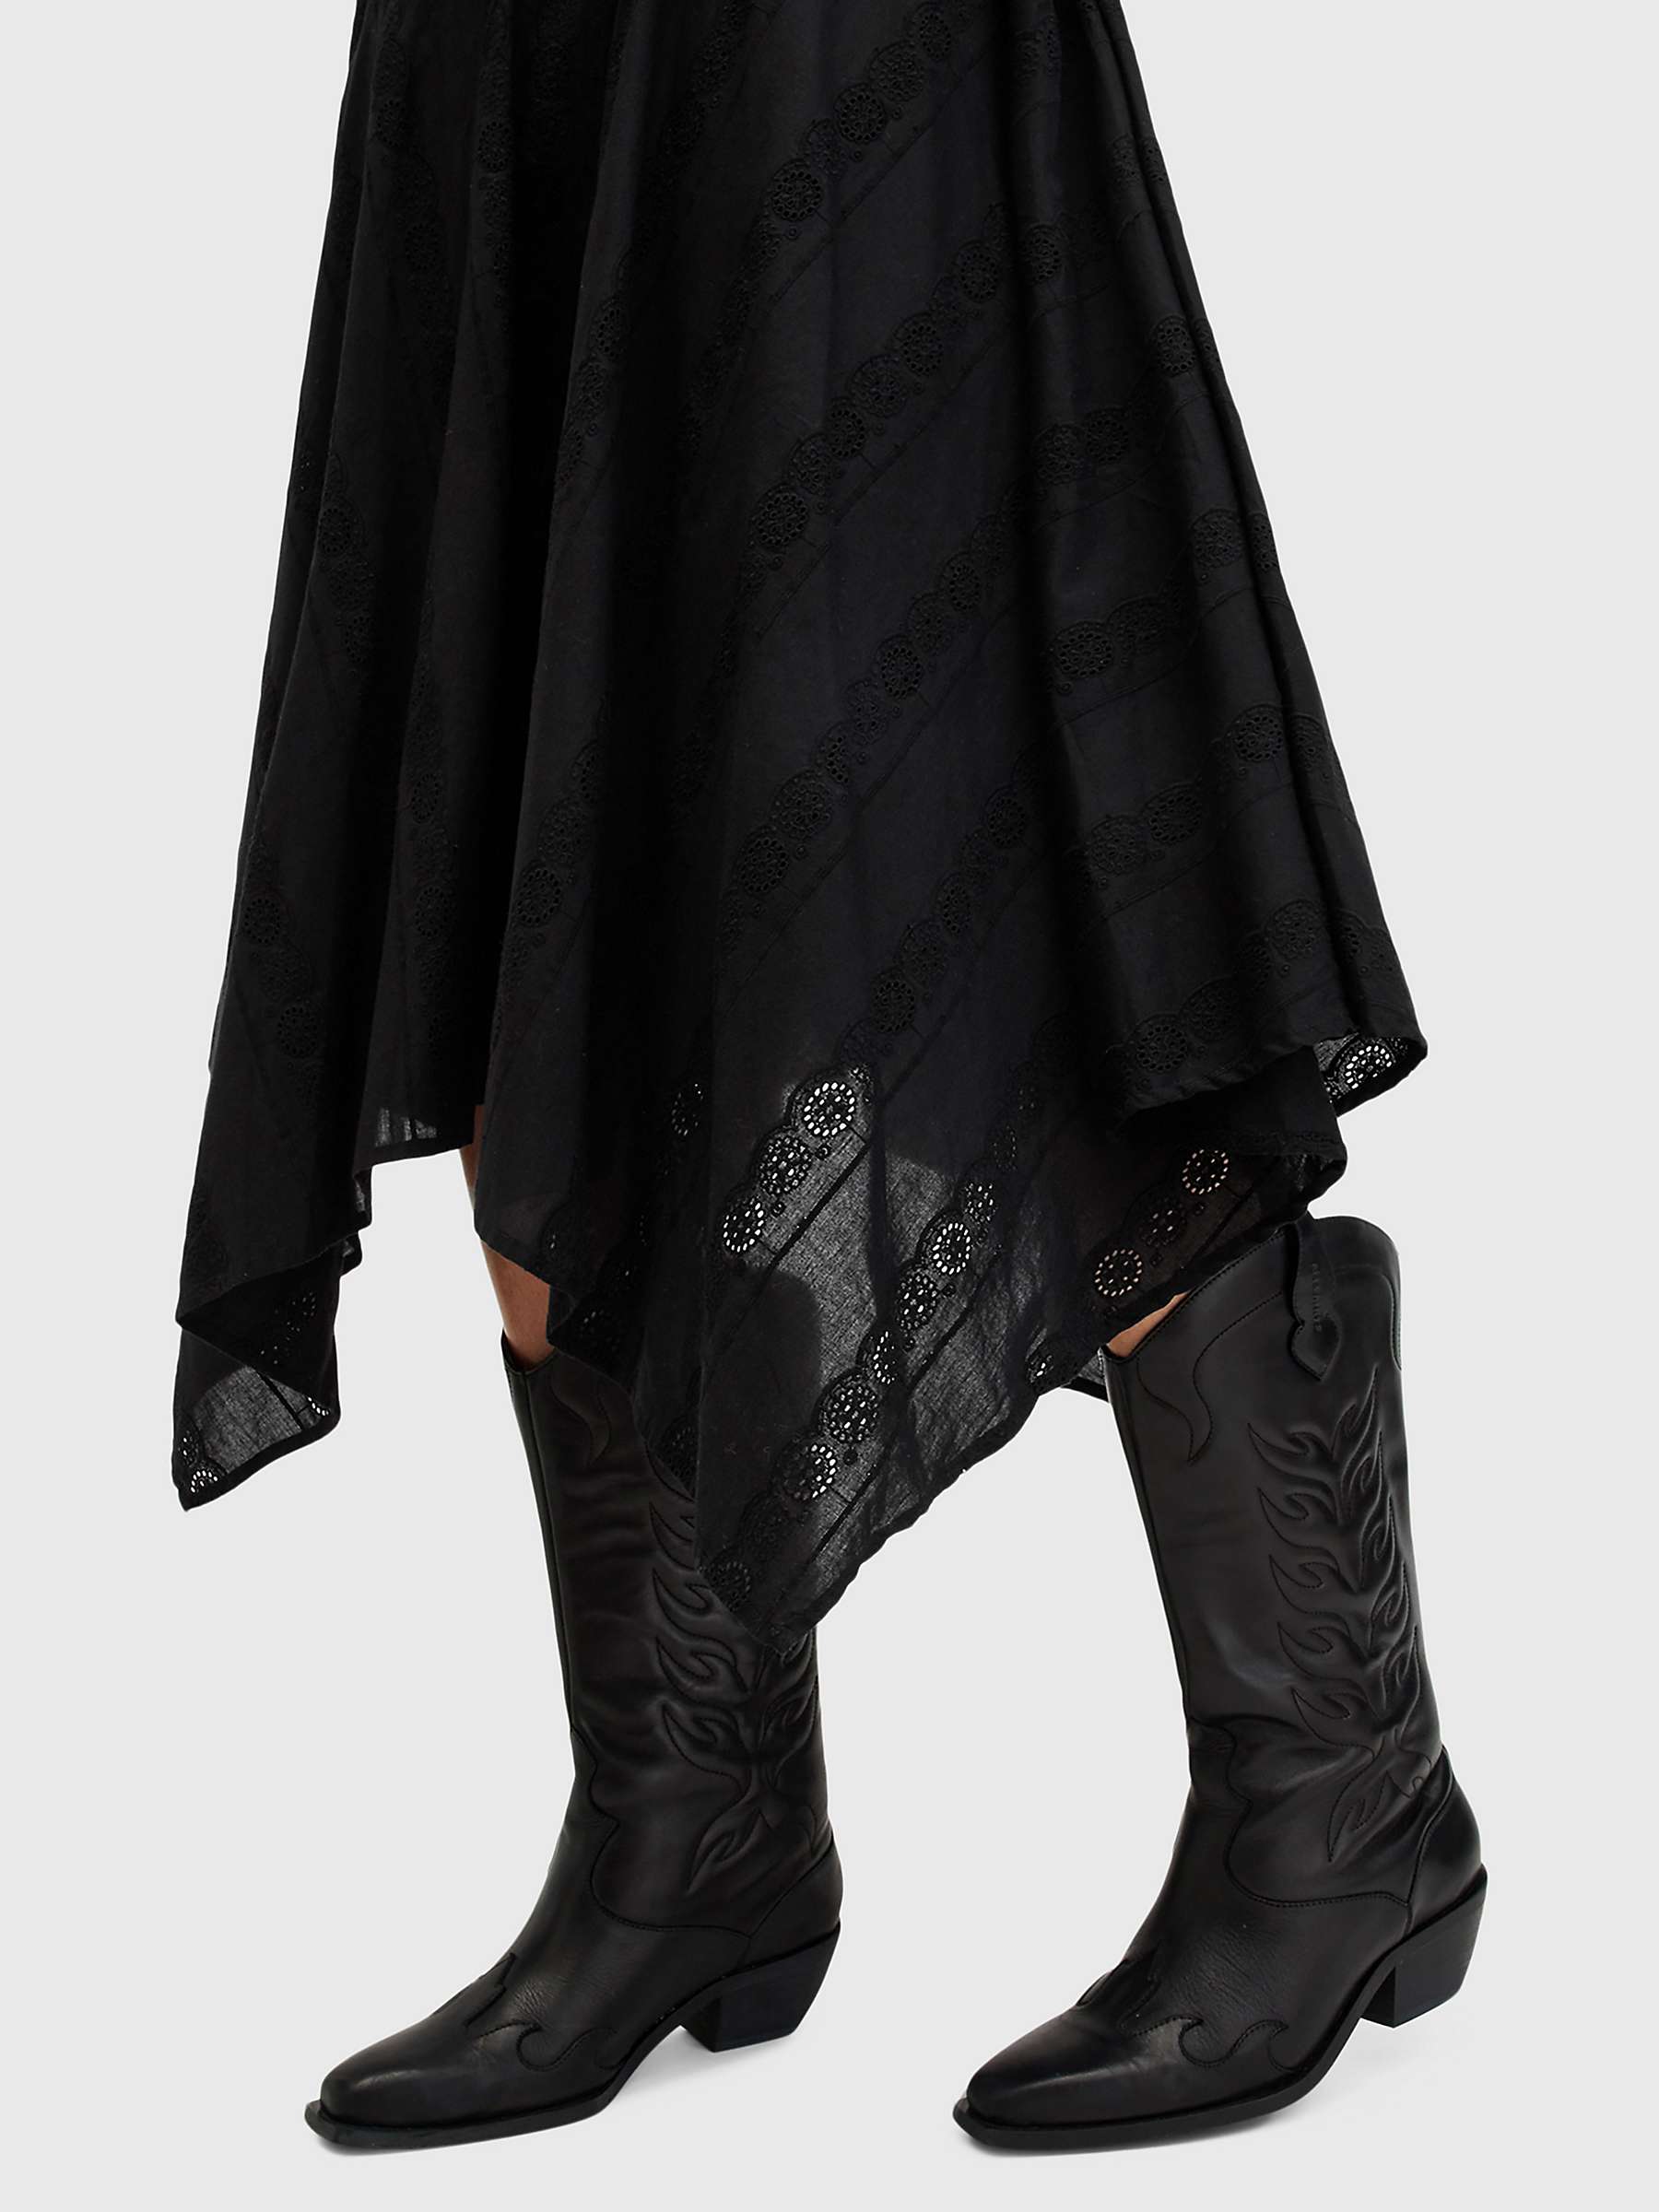 Buy AllSaints Avania Cotton Broderie Midi Dress, Black Online at johnlewis.com